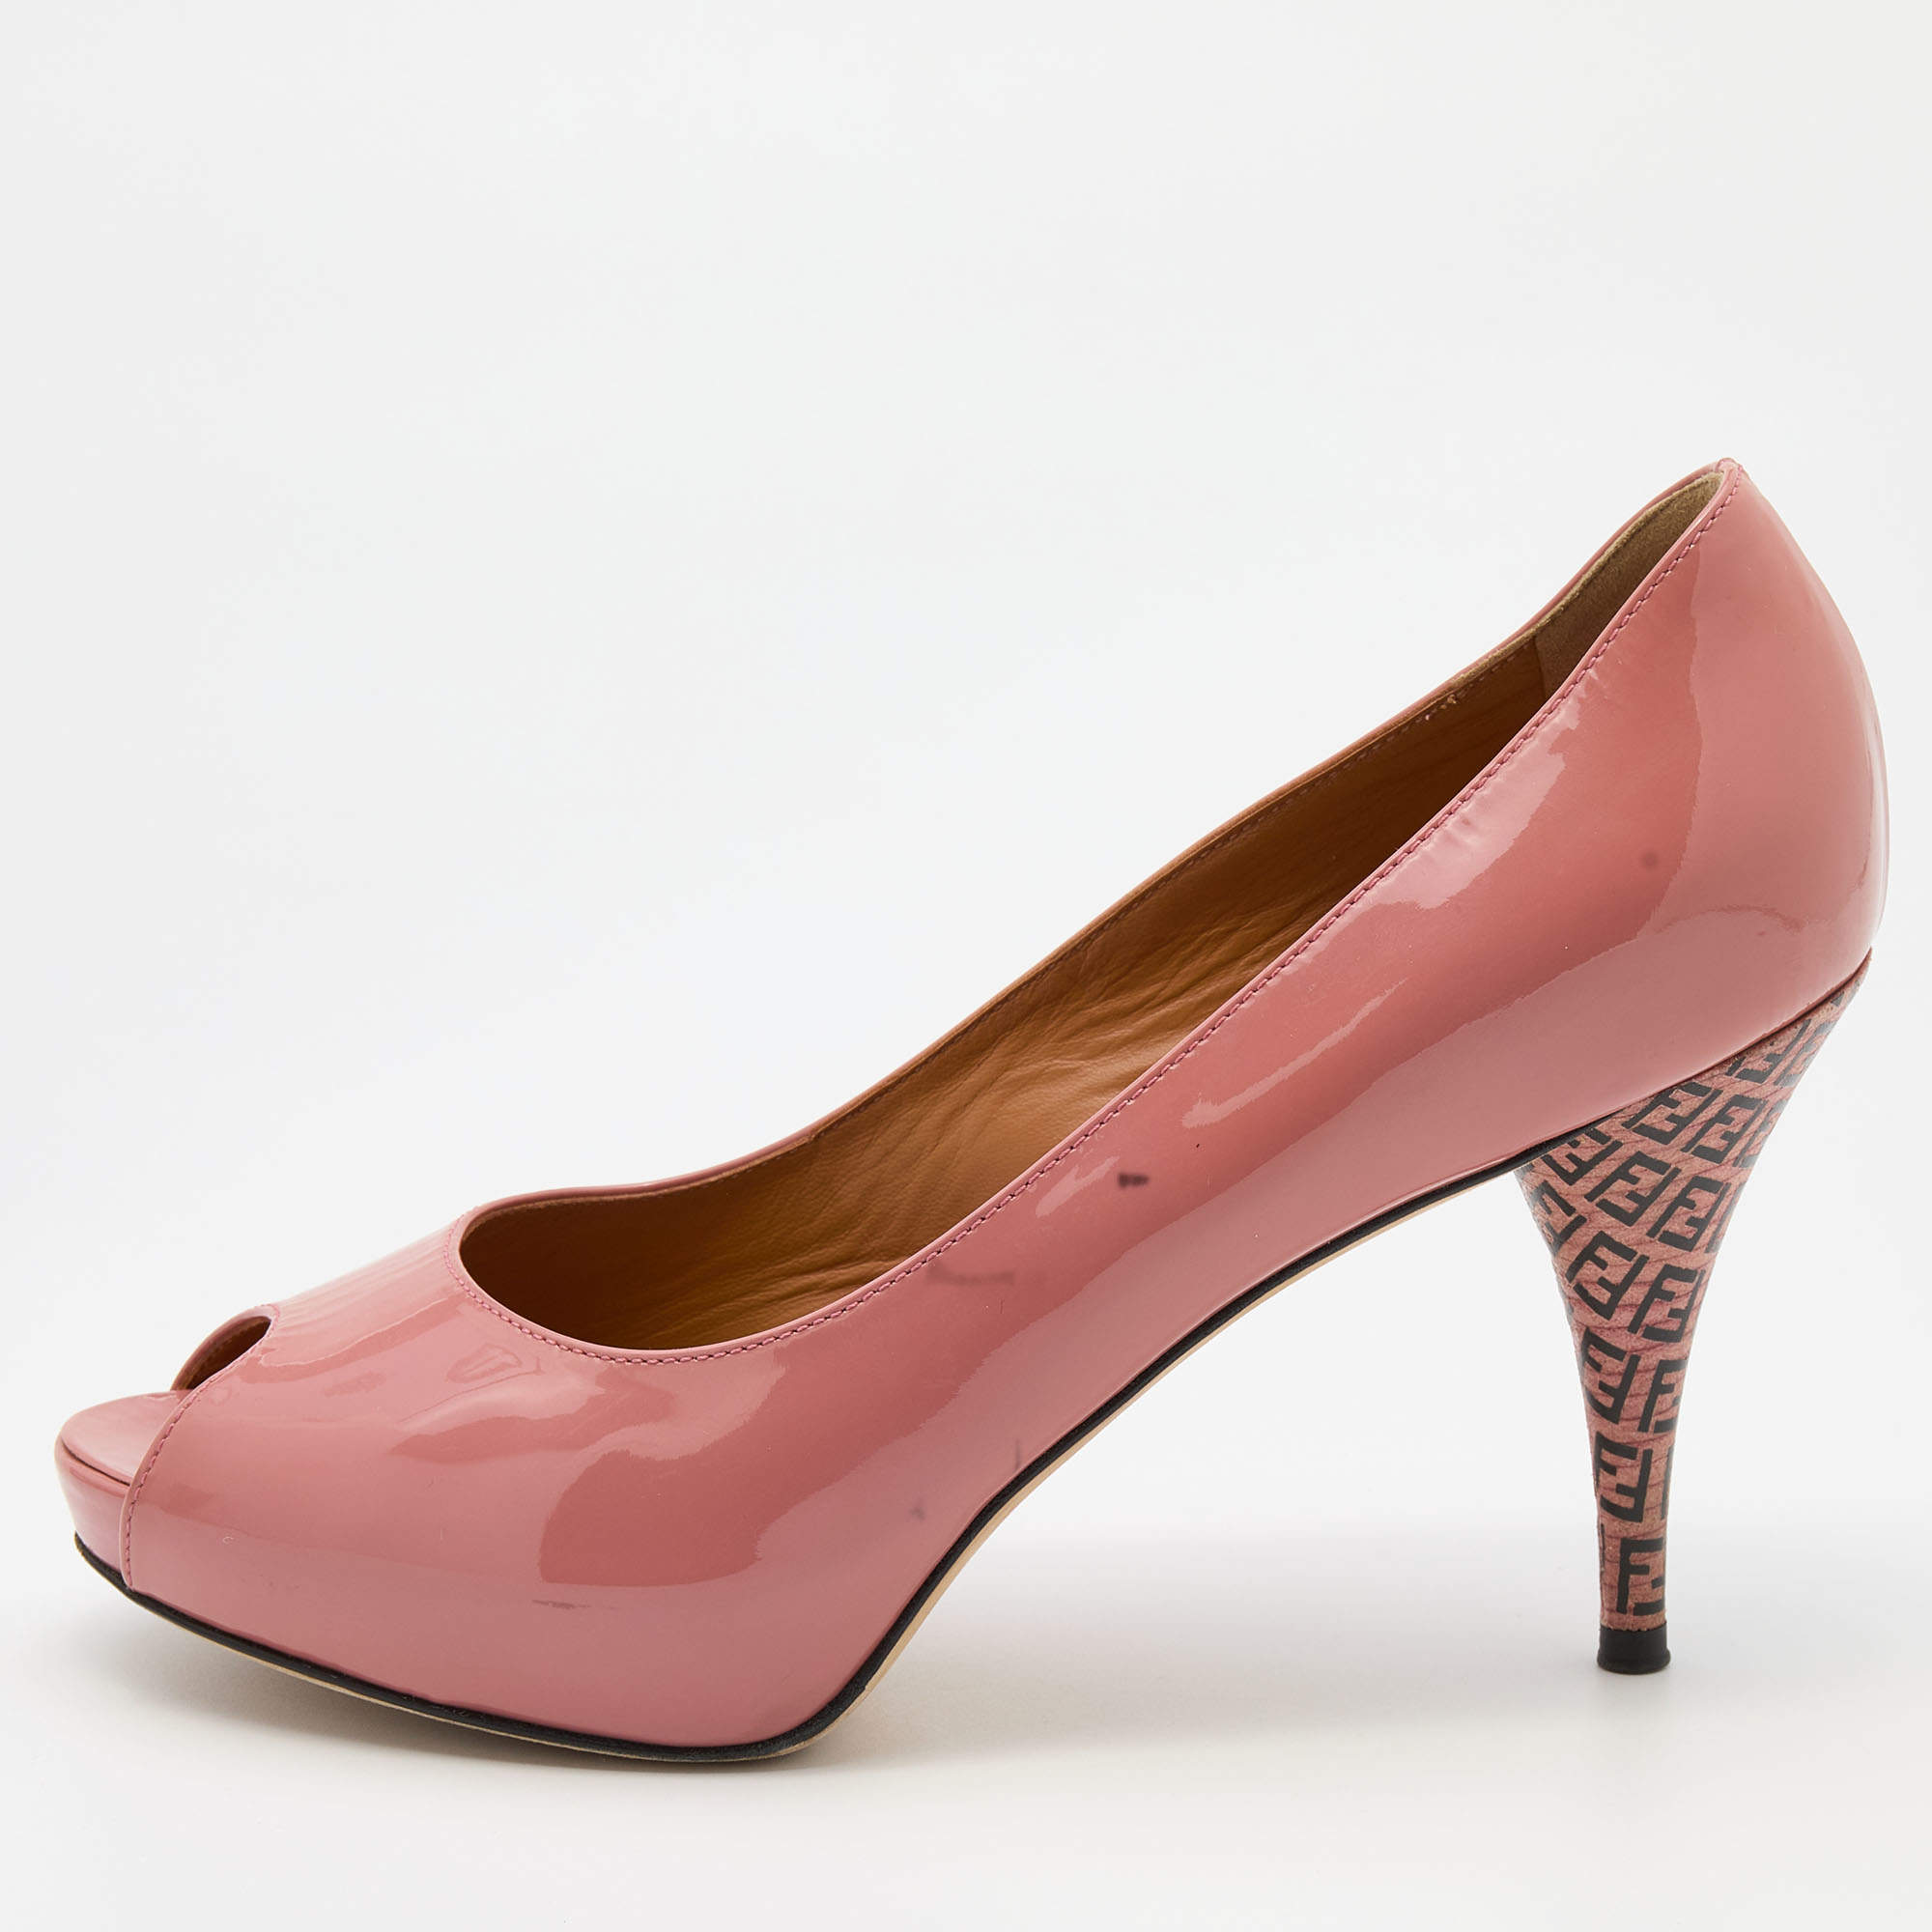 Fendi Pink Patent Leather Peep Toe Pumps Size 37.5